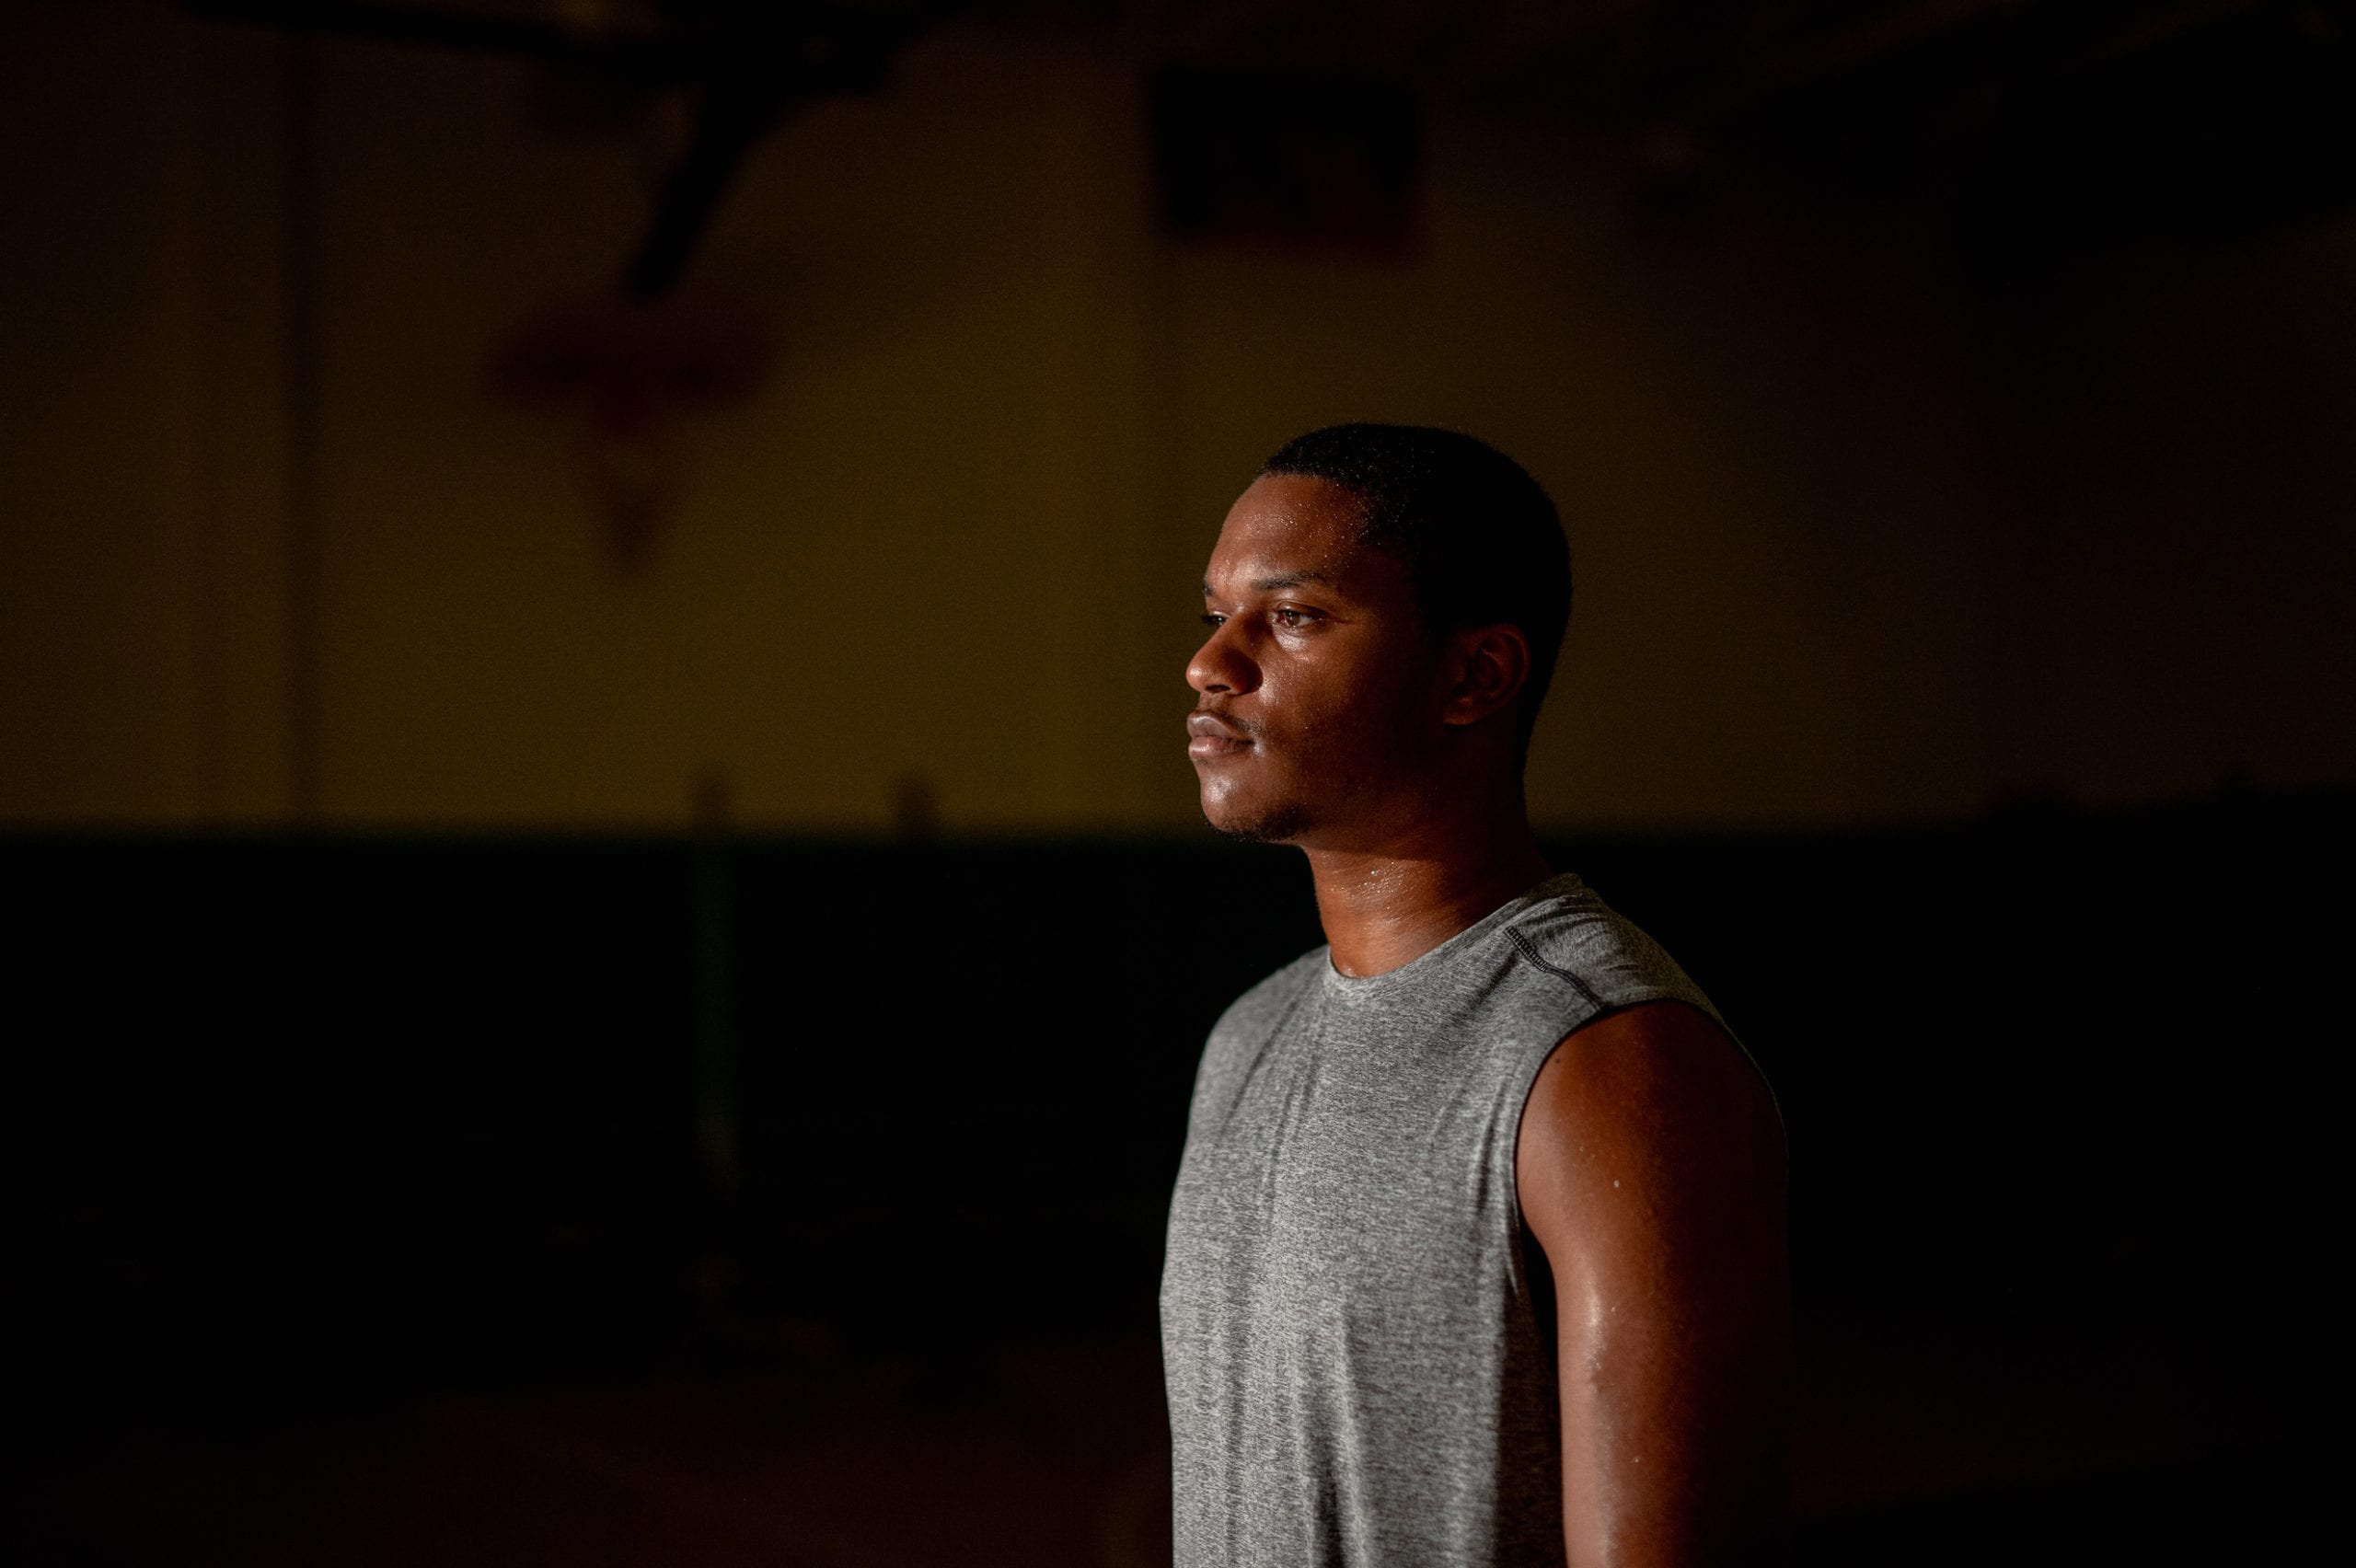 Nike Side profile headshot of African American man wearing a gray t shirt